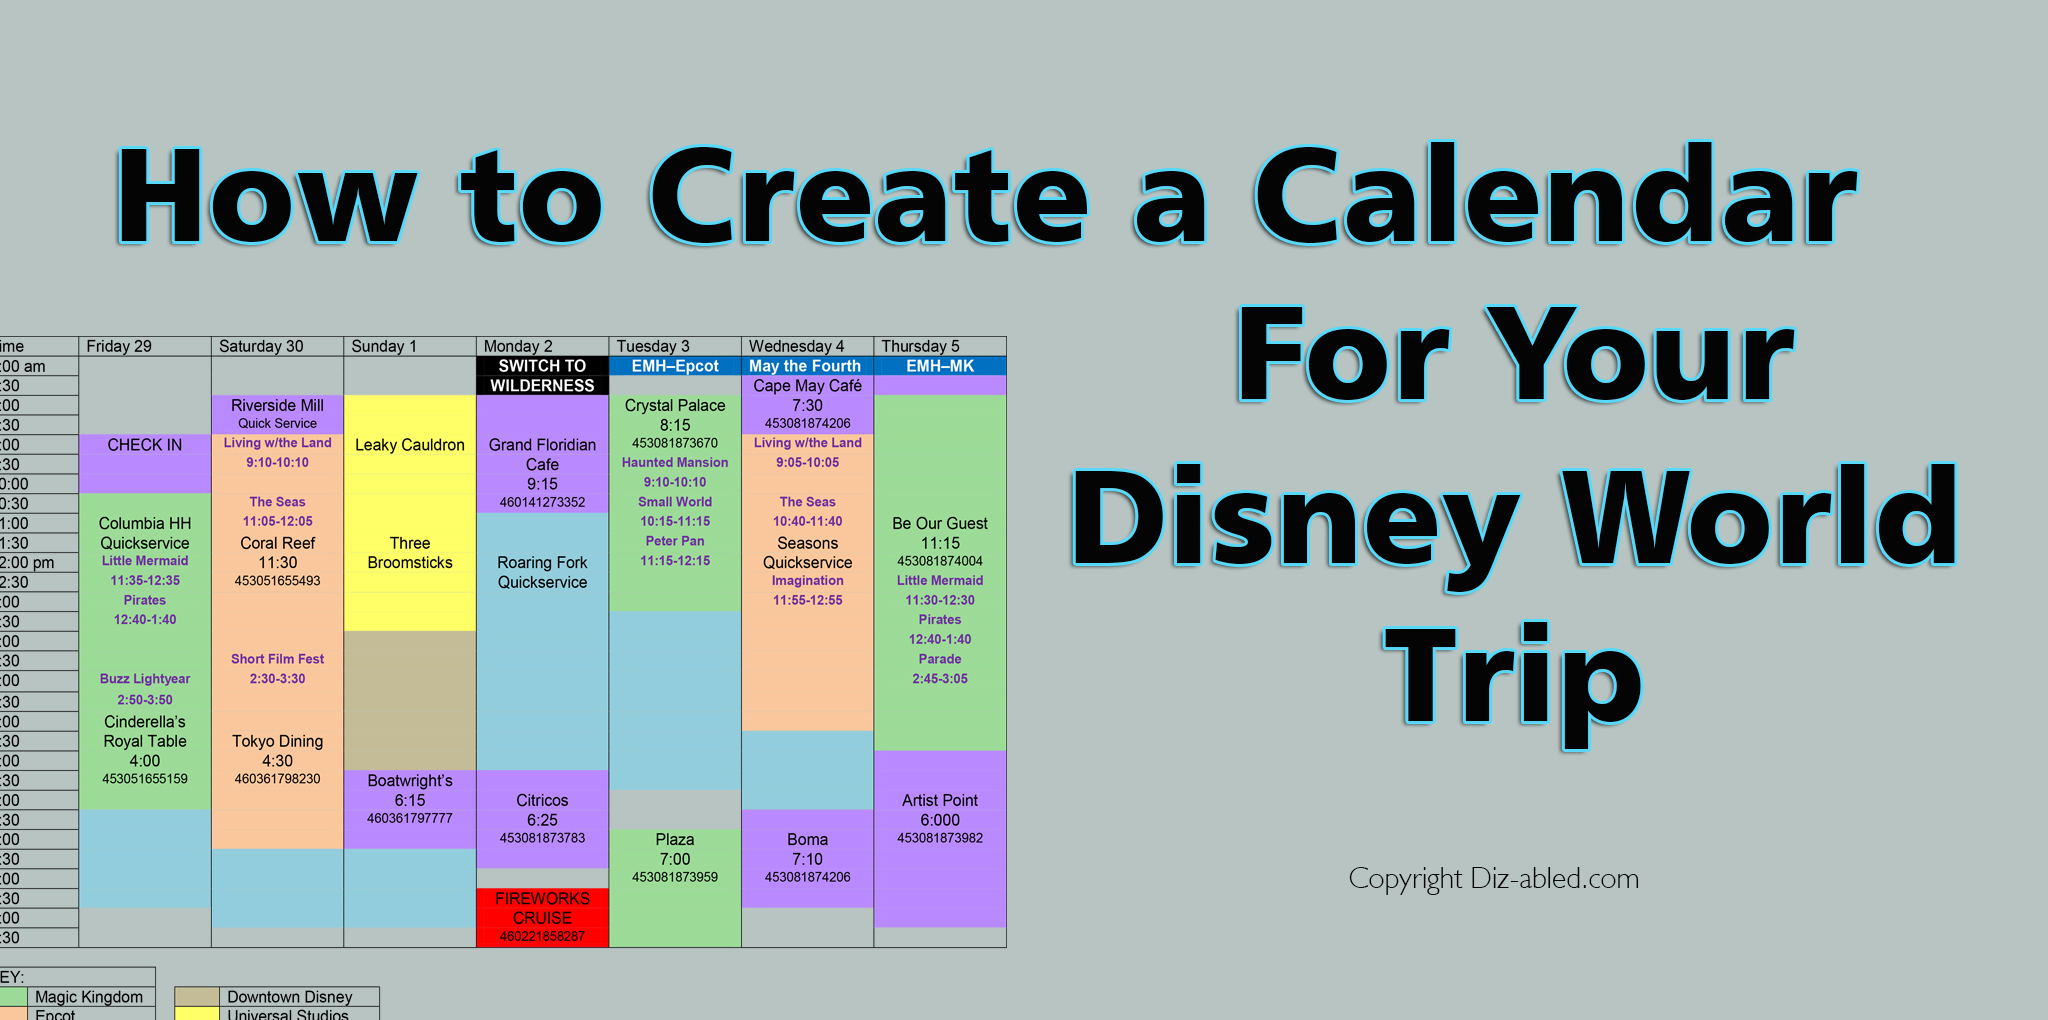 How to Create a Calendar For Your Disney World Trip - Walt Disney World Made Easy for Everyone